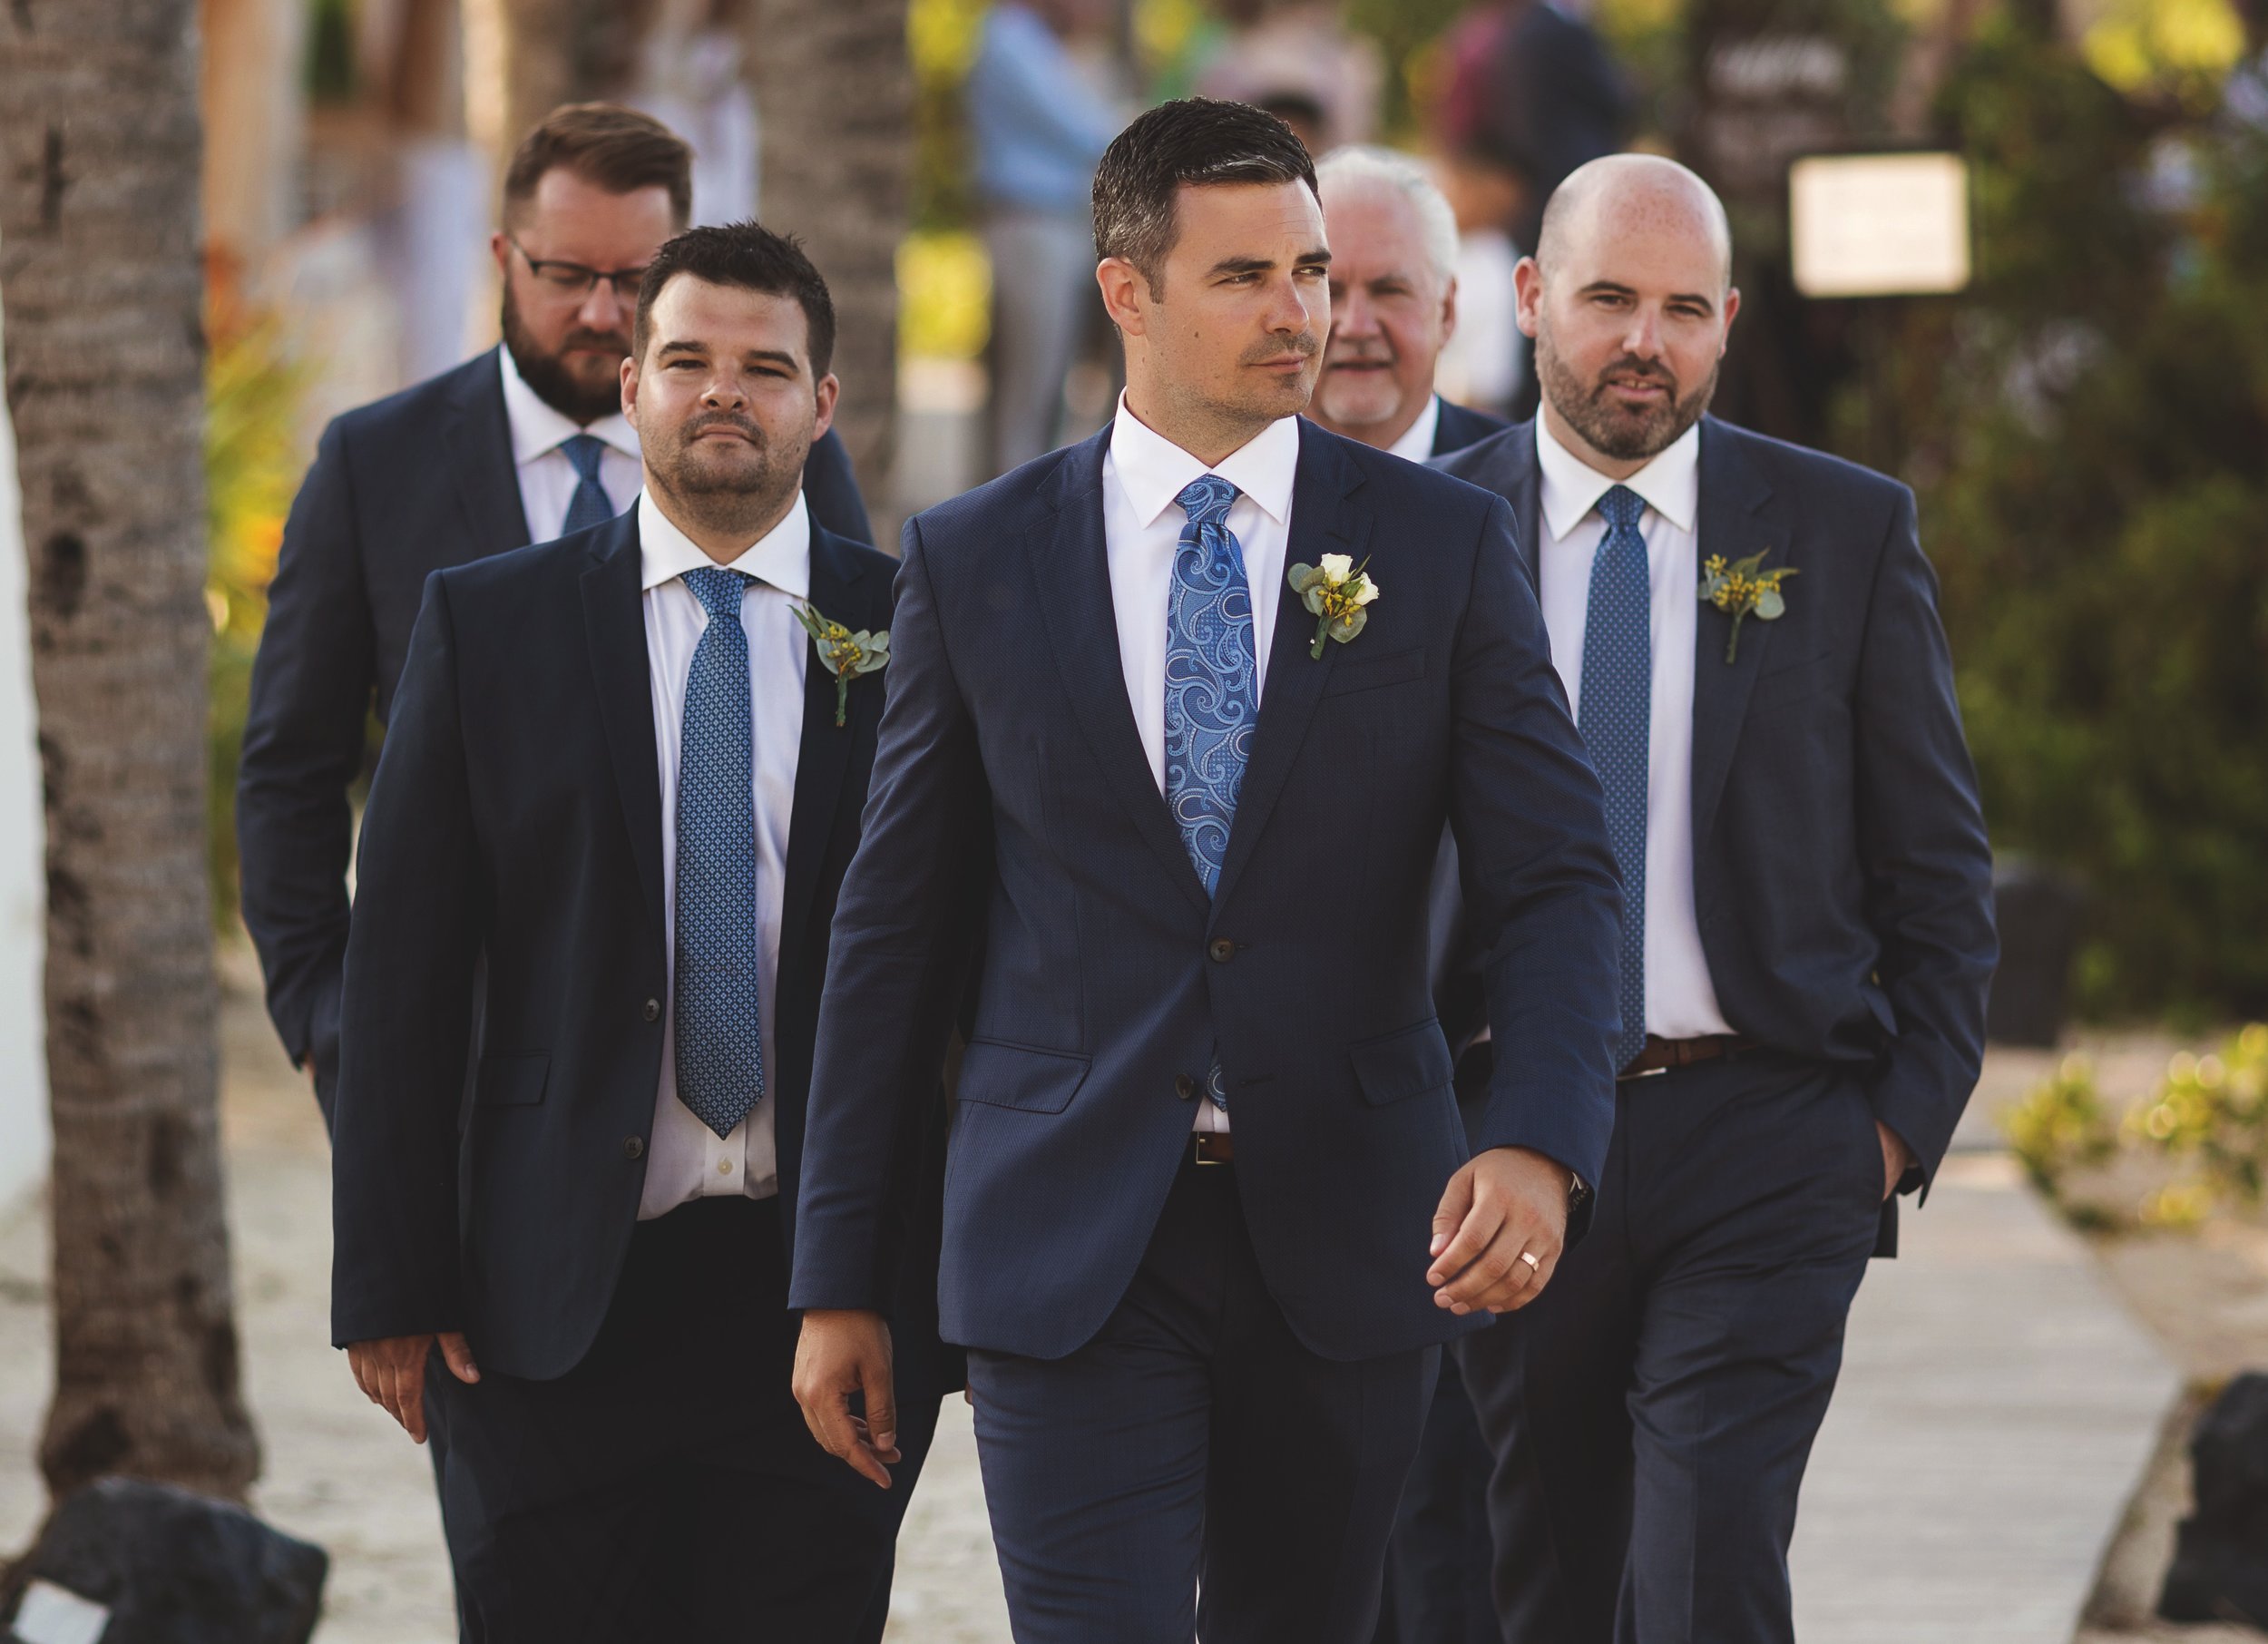 Groom with groomsmen walking on walkway at their Cancun wedding